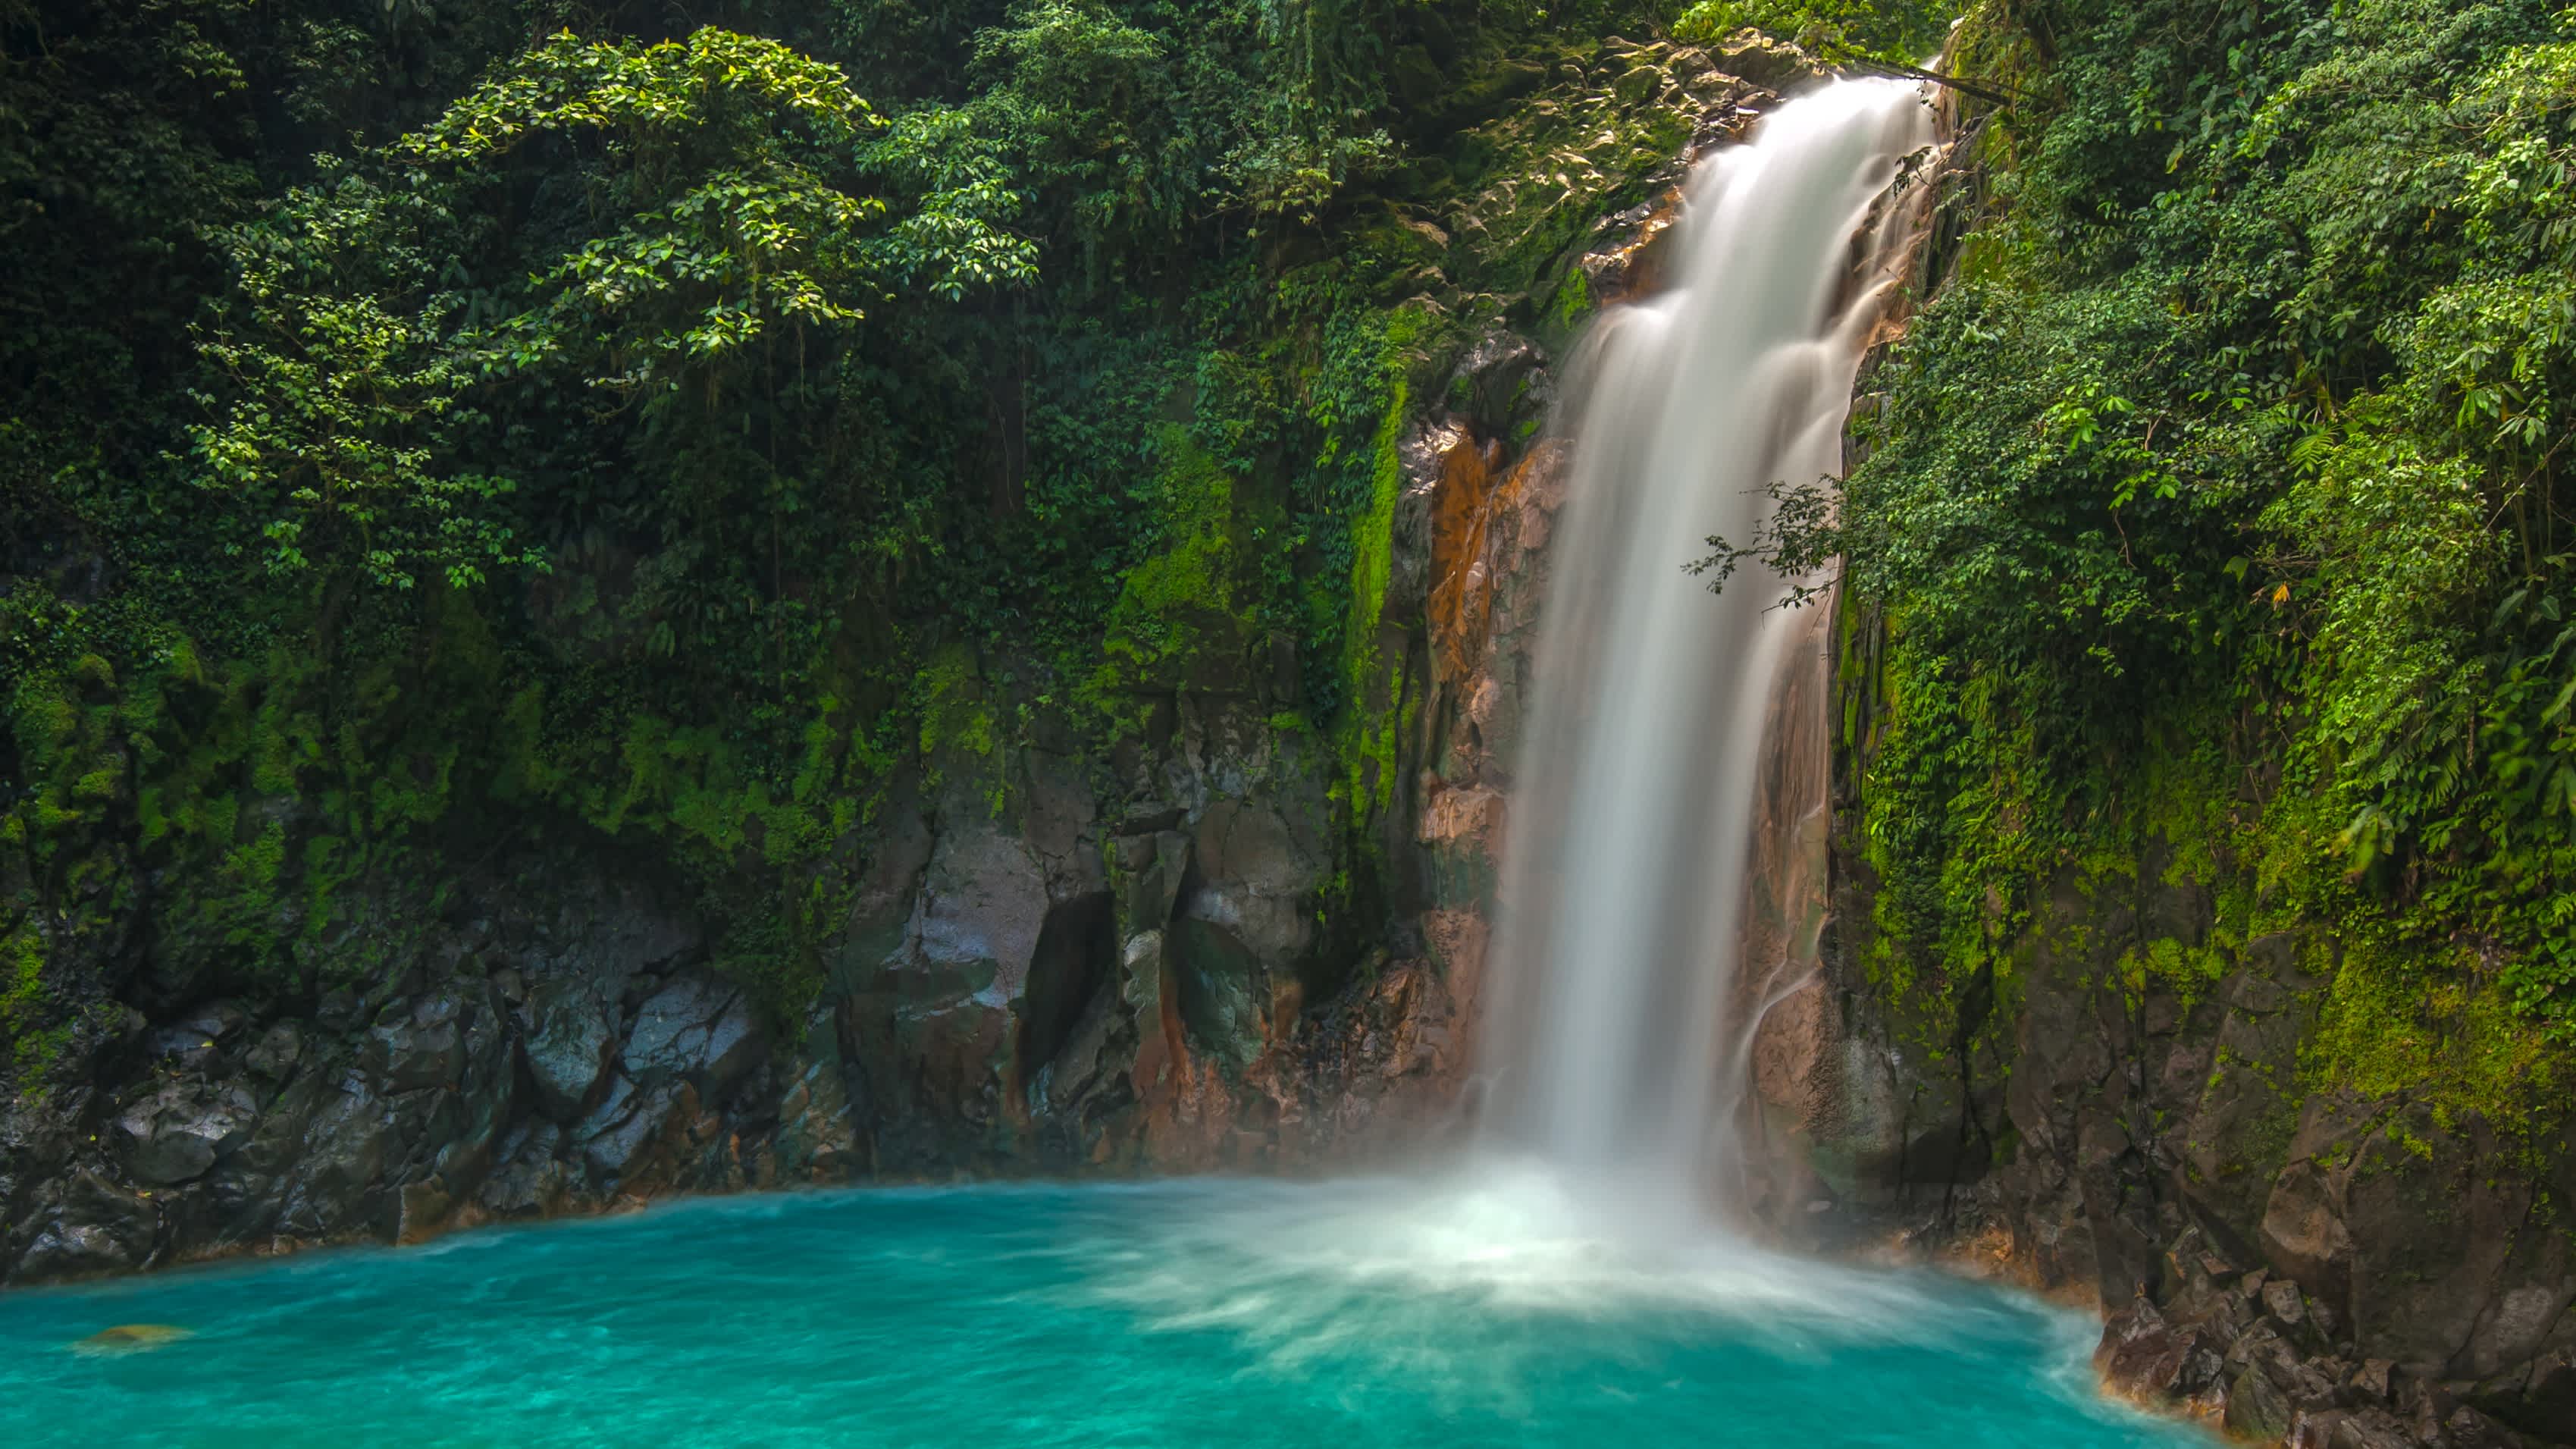 Vue de la cascade Rio Celeste dans le parc national de Tenorio, Costa Rica

